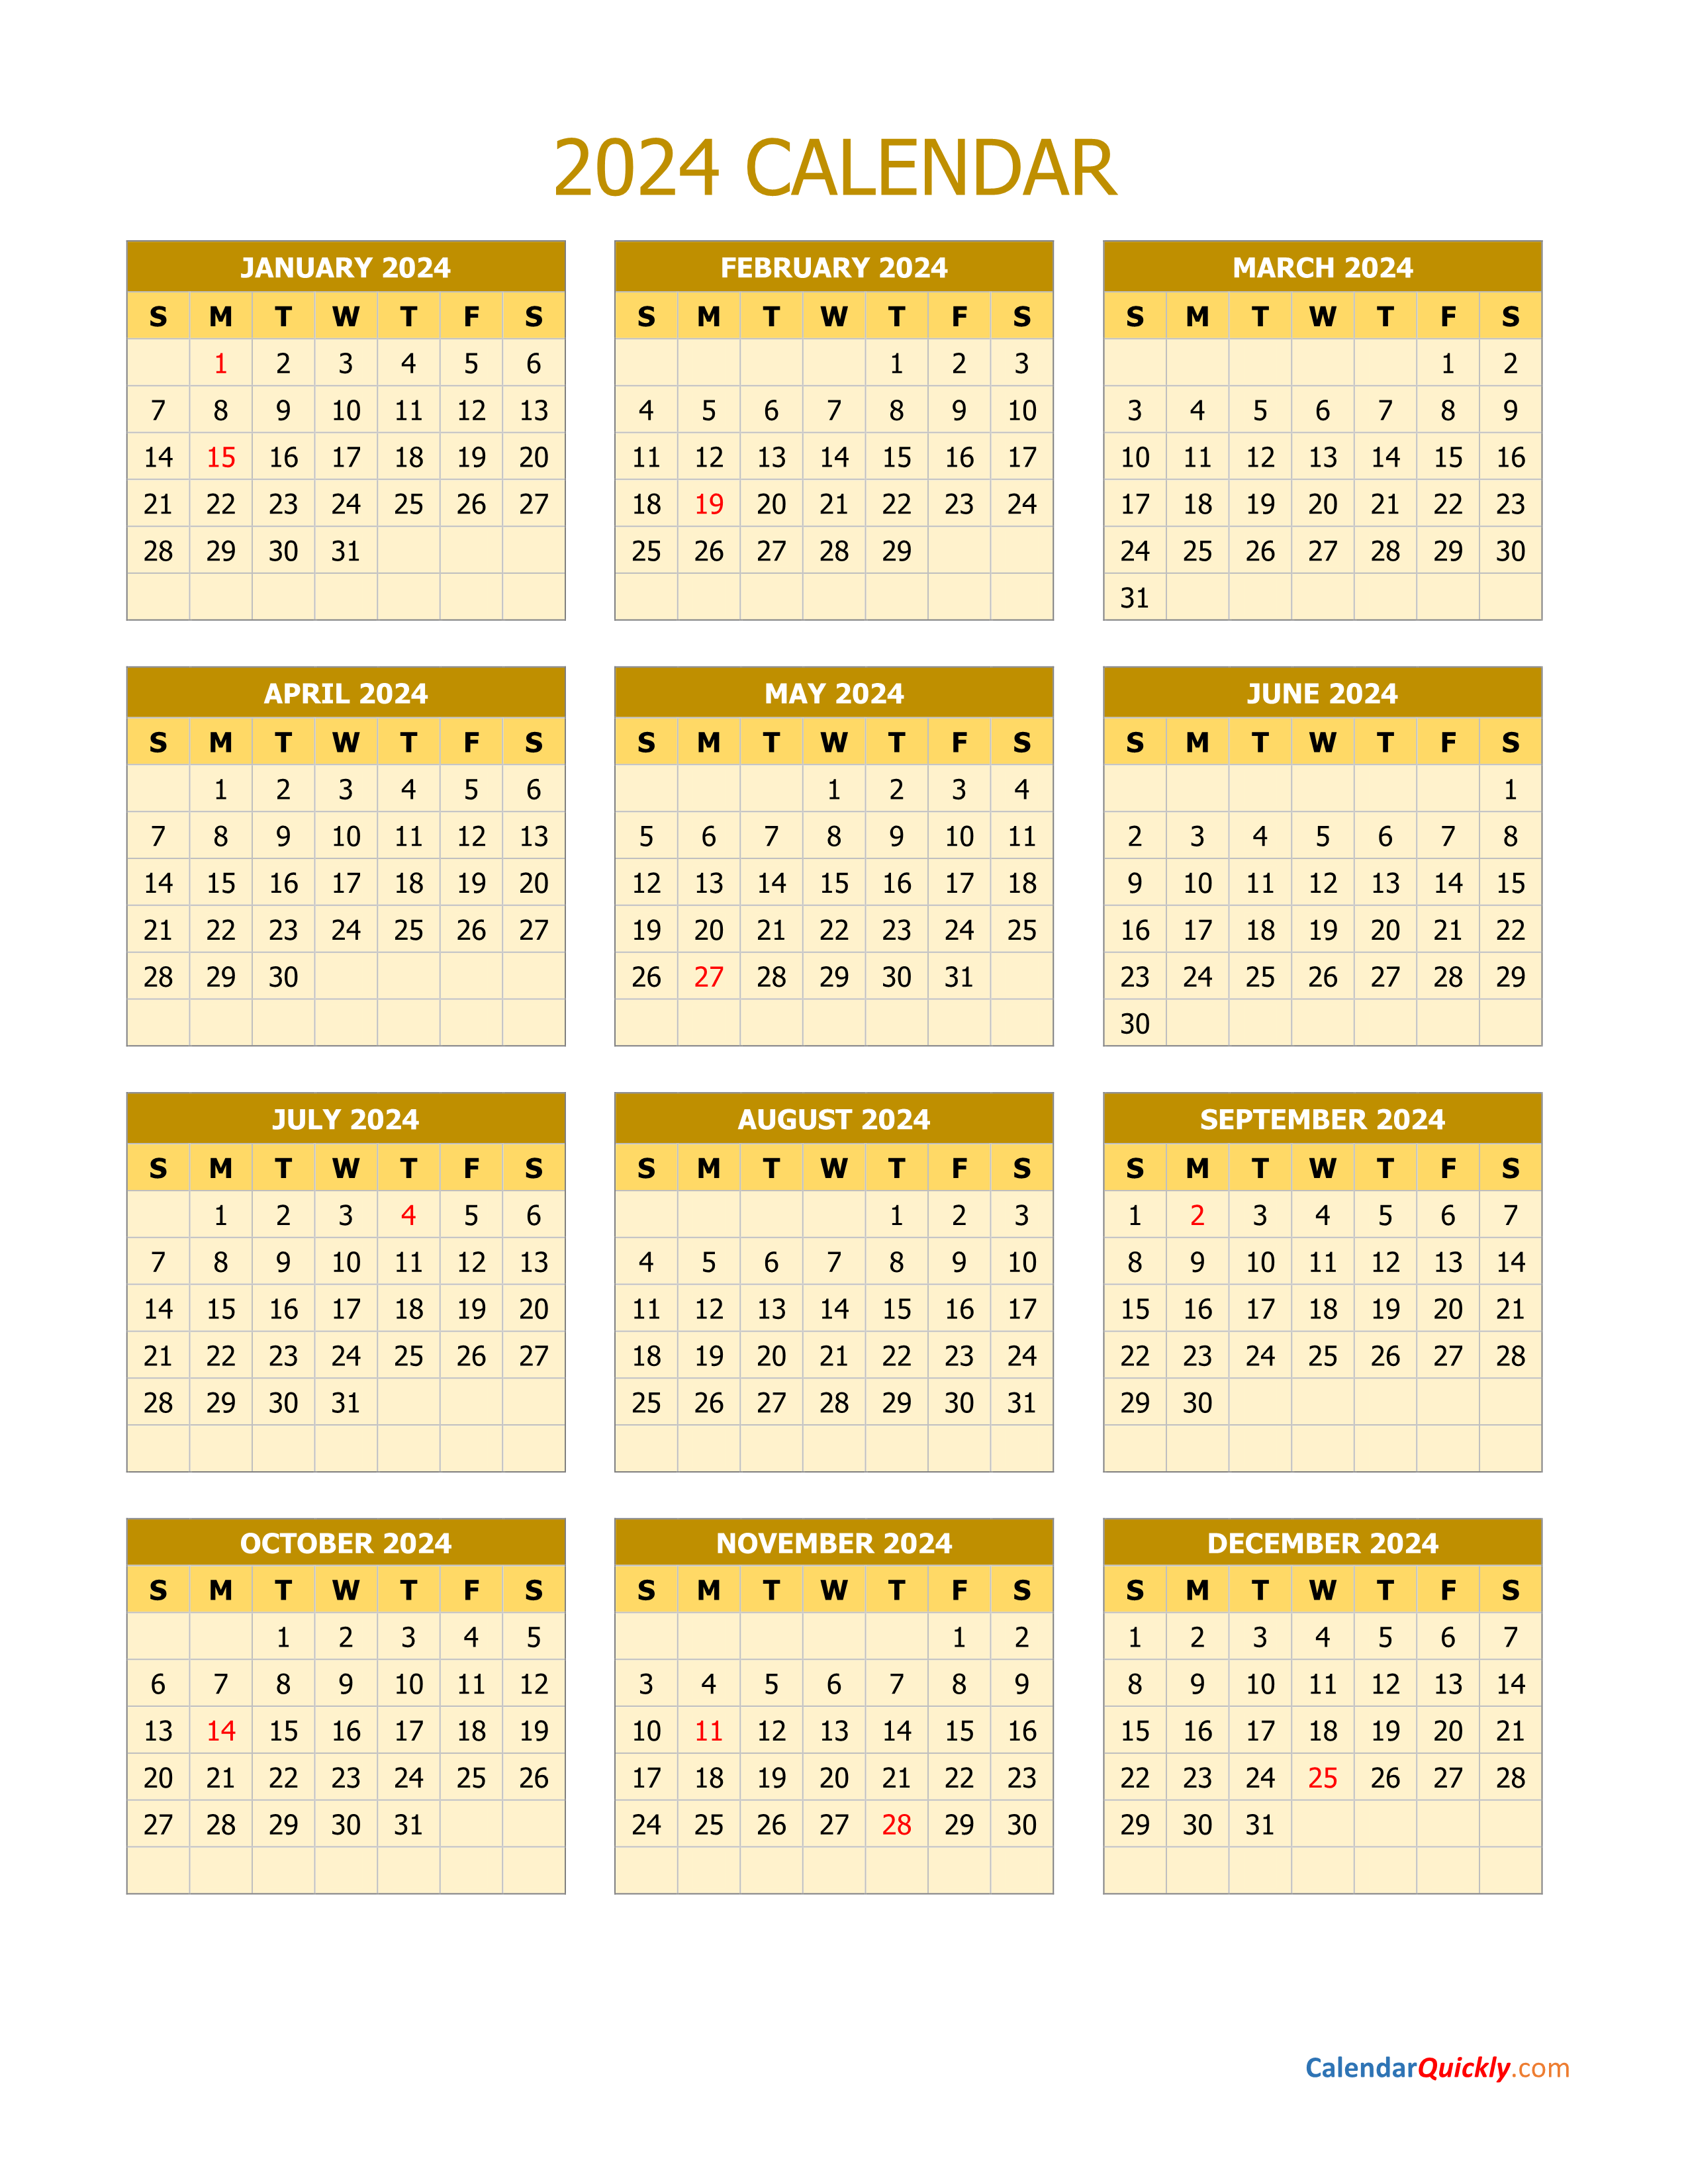 2024 Calendar Vertical Calendar Quickly - Free Printable 2024 Monthly Desk Calendar